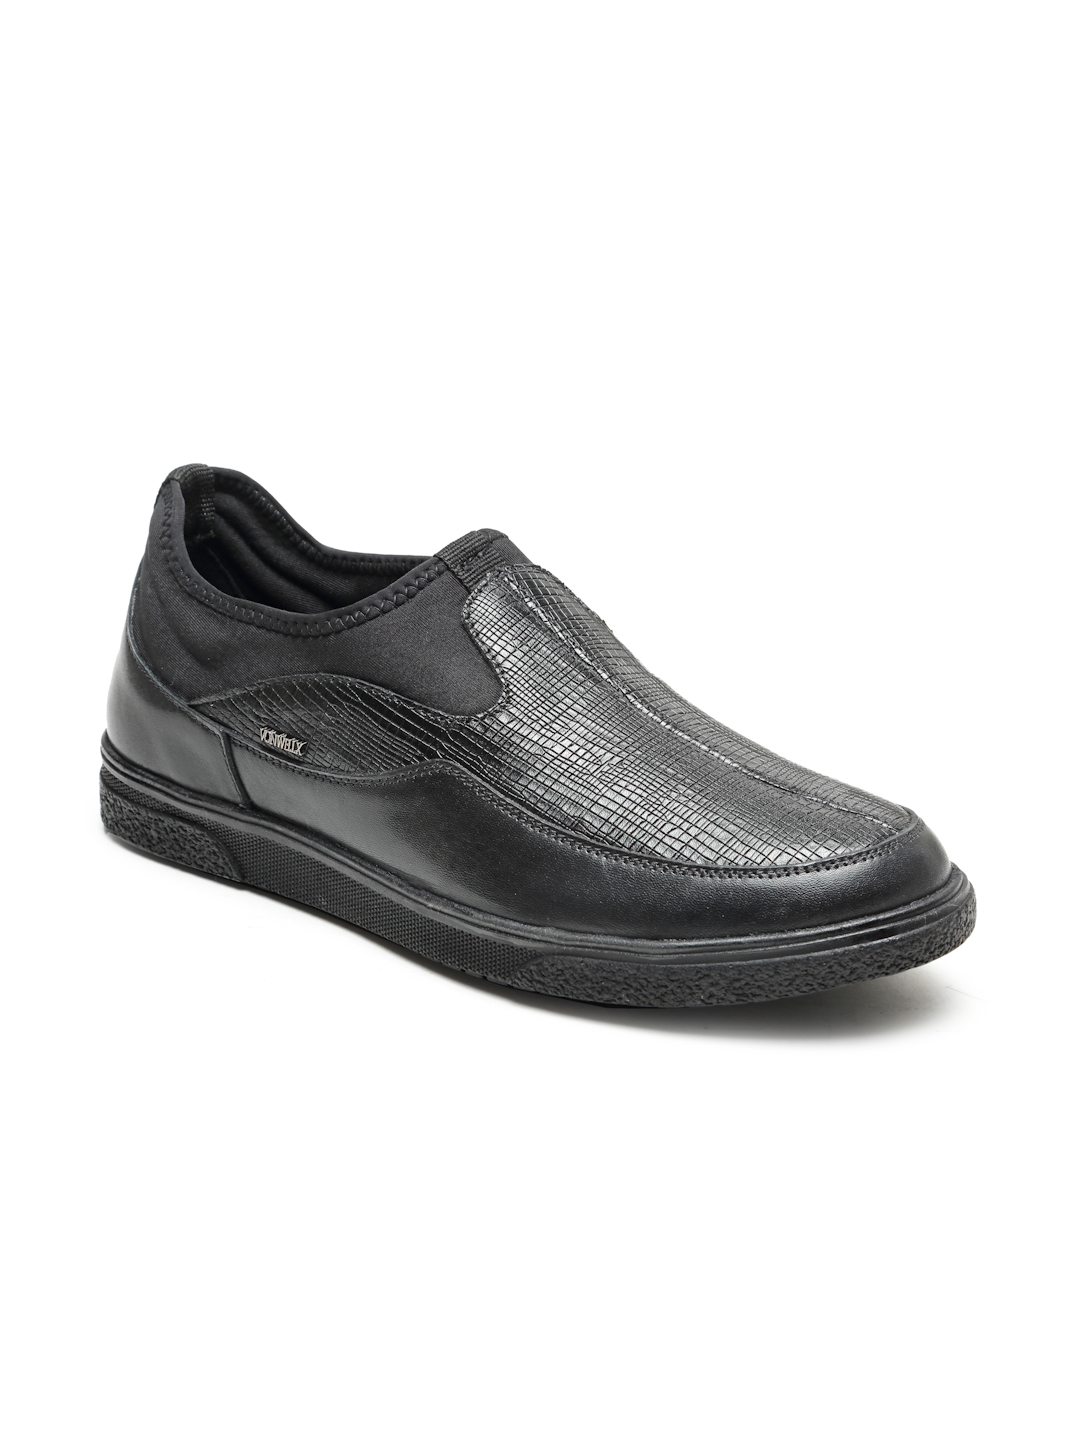 Buy Von Wellx Germany Comfort Men's Black Casual Loafers Everett Online in Ludhiana